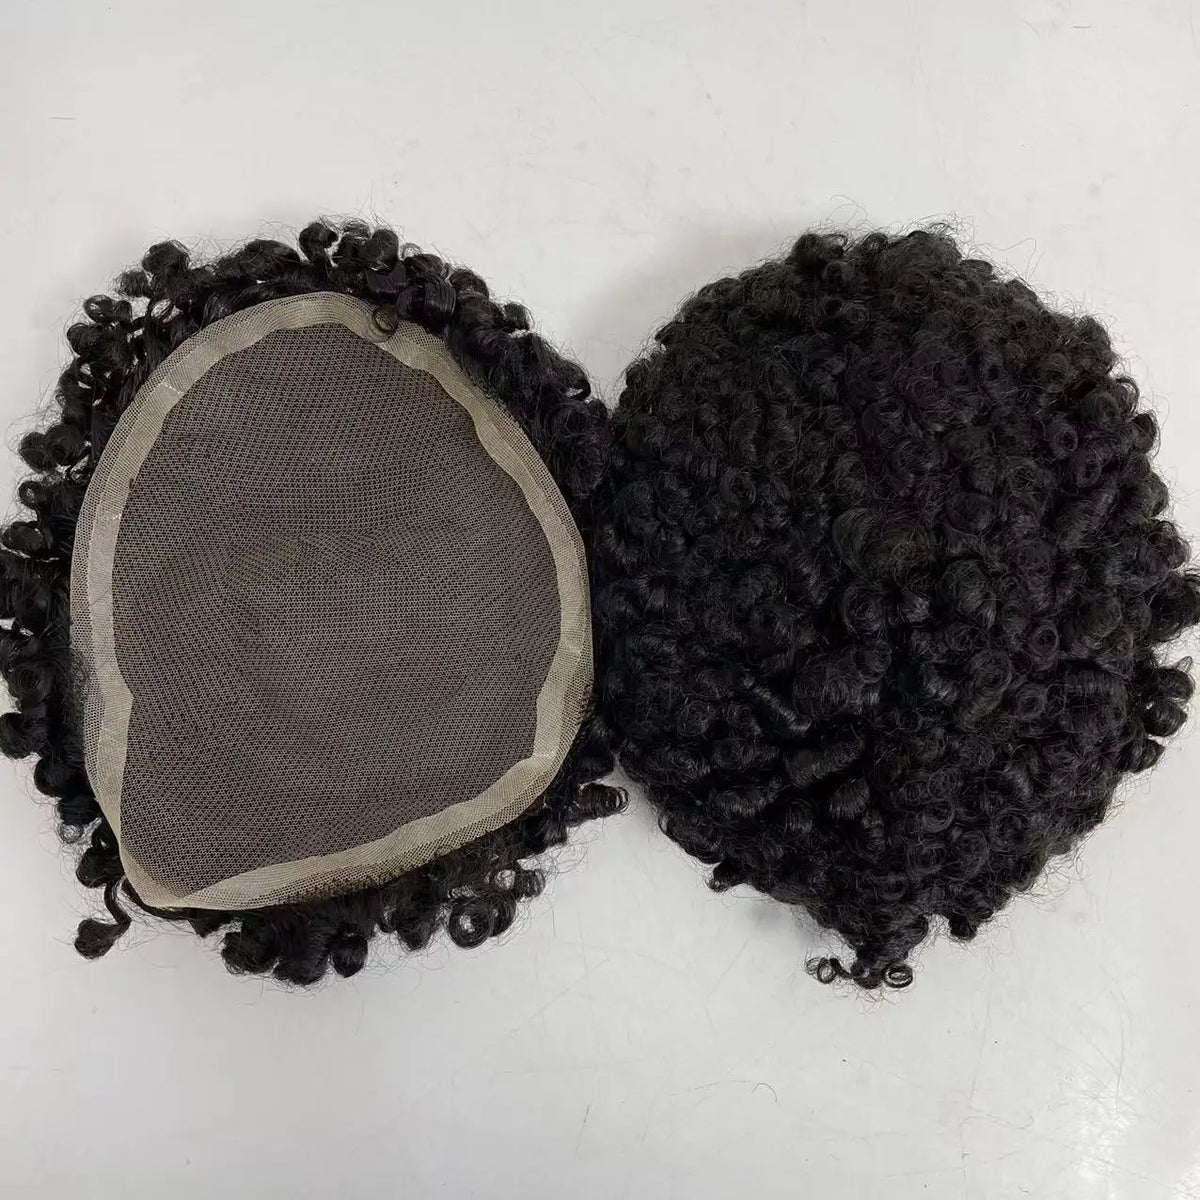 12mm Curl Full Lace Toupee for Black Men